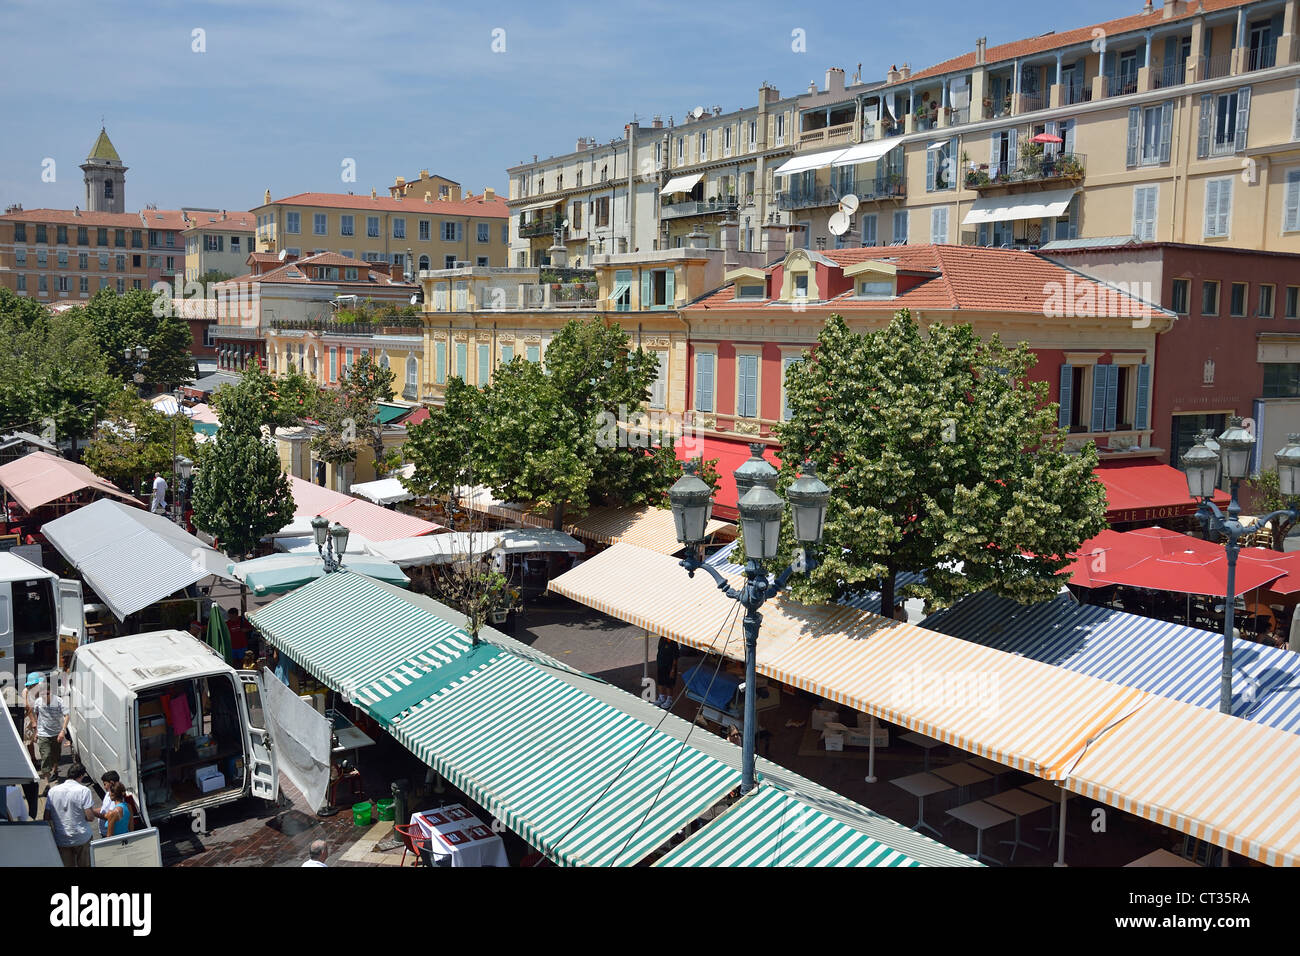 Il mercato dei fiori di Cours Saleya, Old Town (Vieux Nice), Nizza Côte d'Azur, Alpes-Maritimes, Provence-Alpes-Côte d'Azur, in Francia Foto Stock